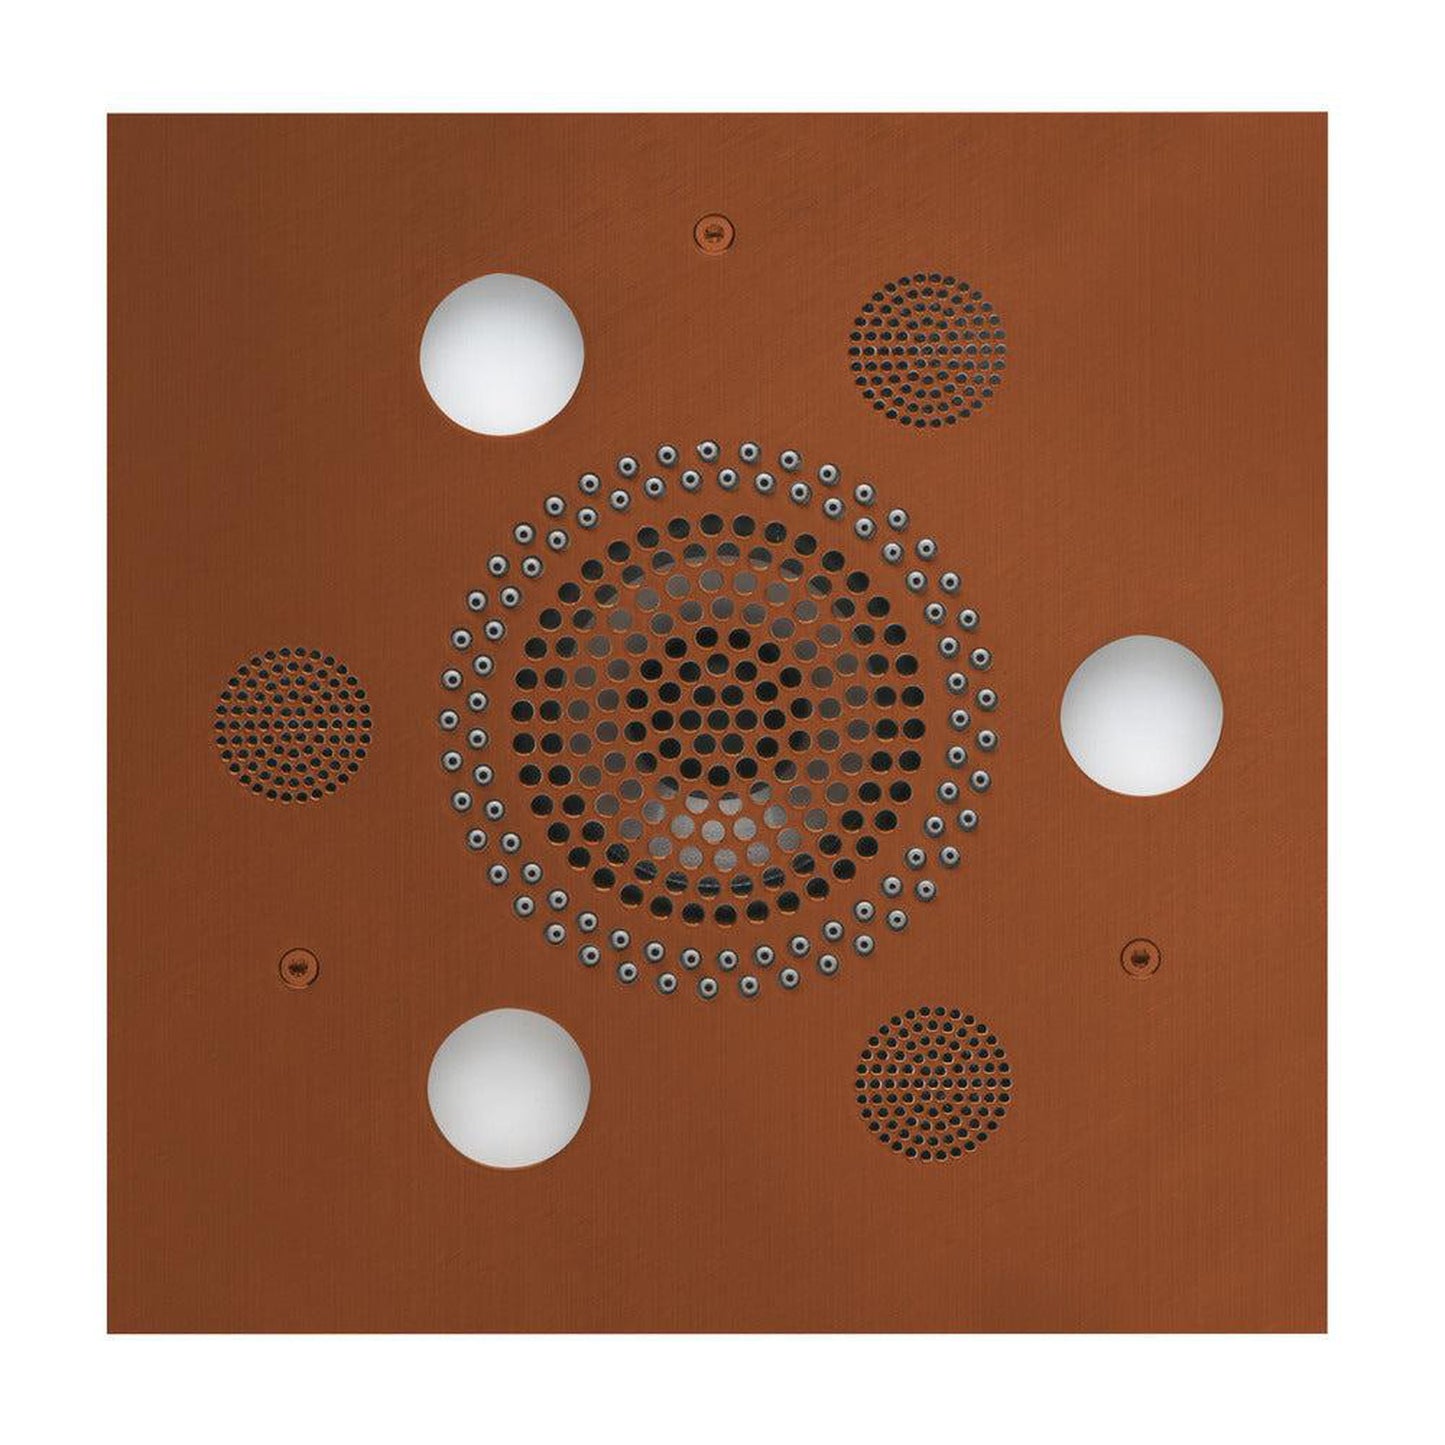 ThermaSol 10" x 10" Antique Copper Finish Square Serenity Advanced Light, Sound and Rain System